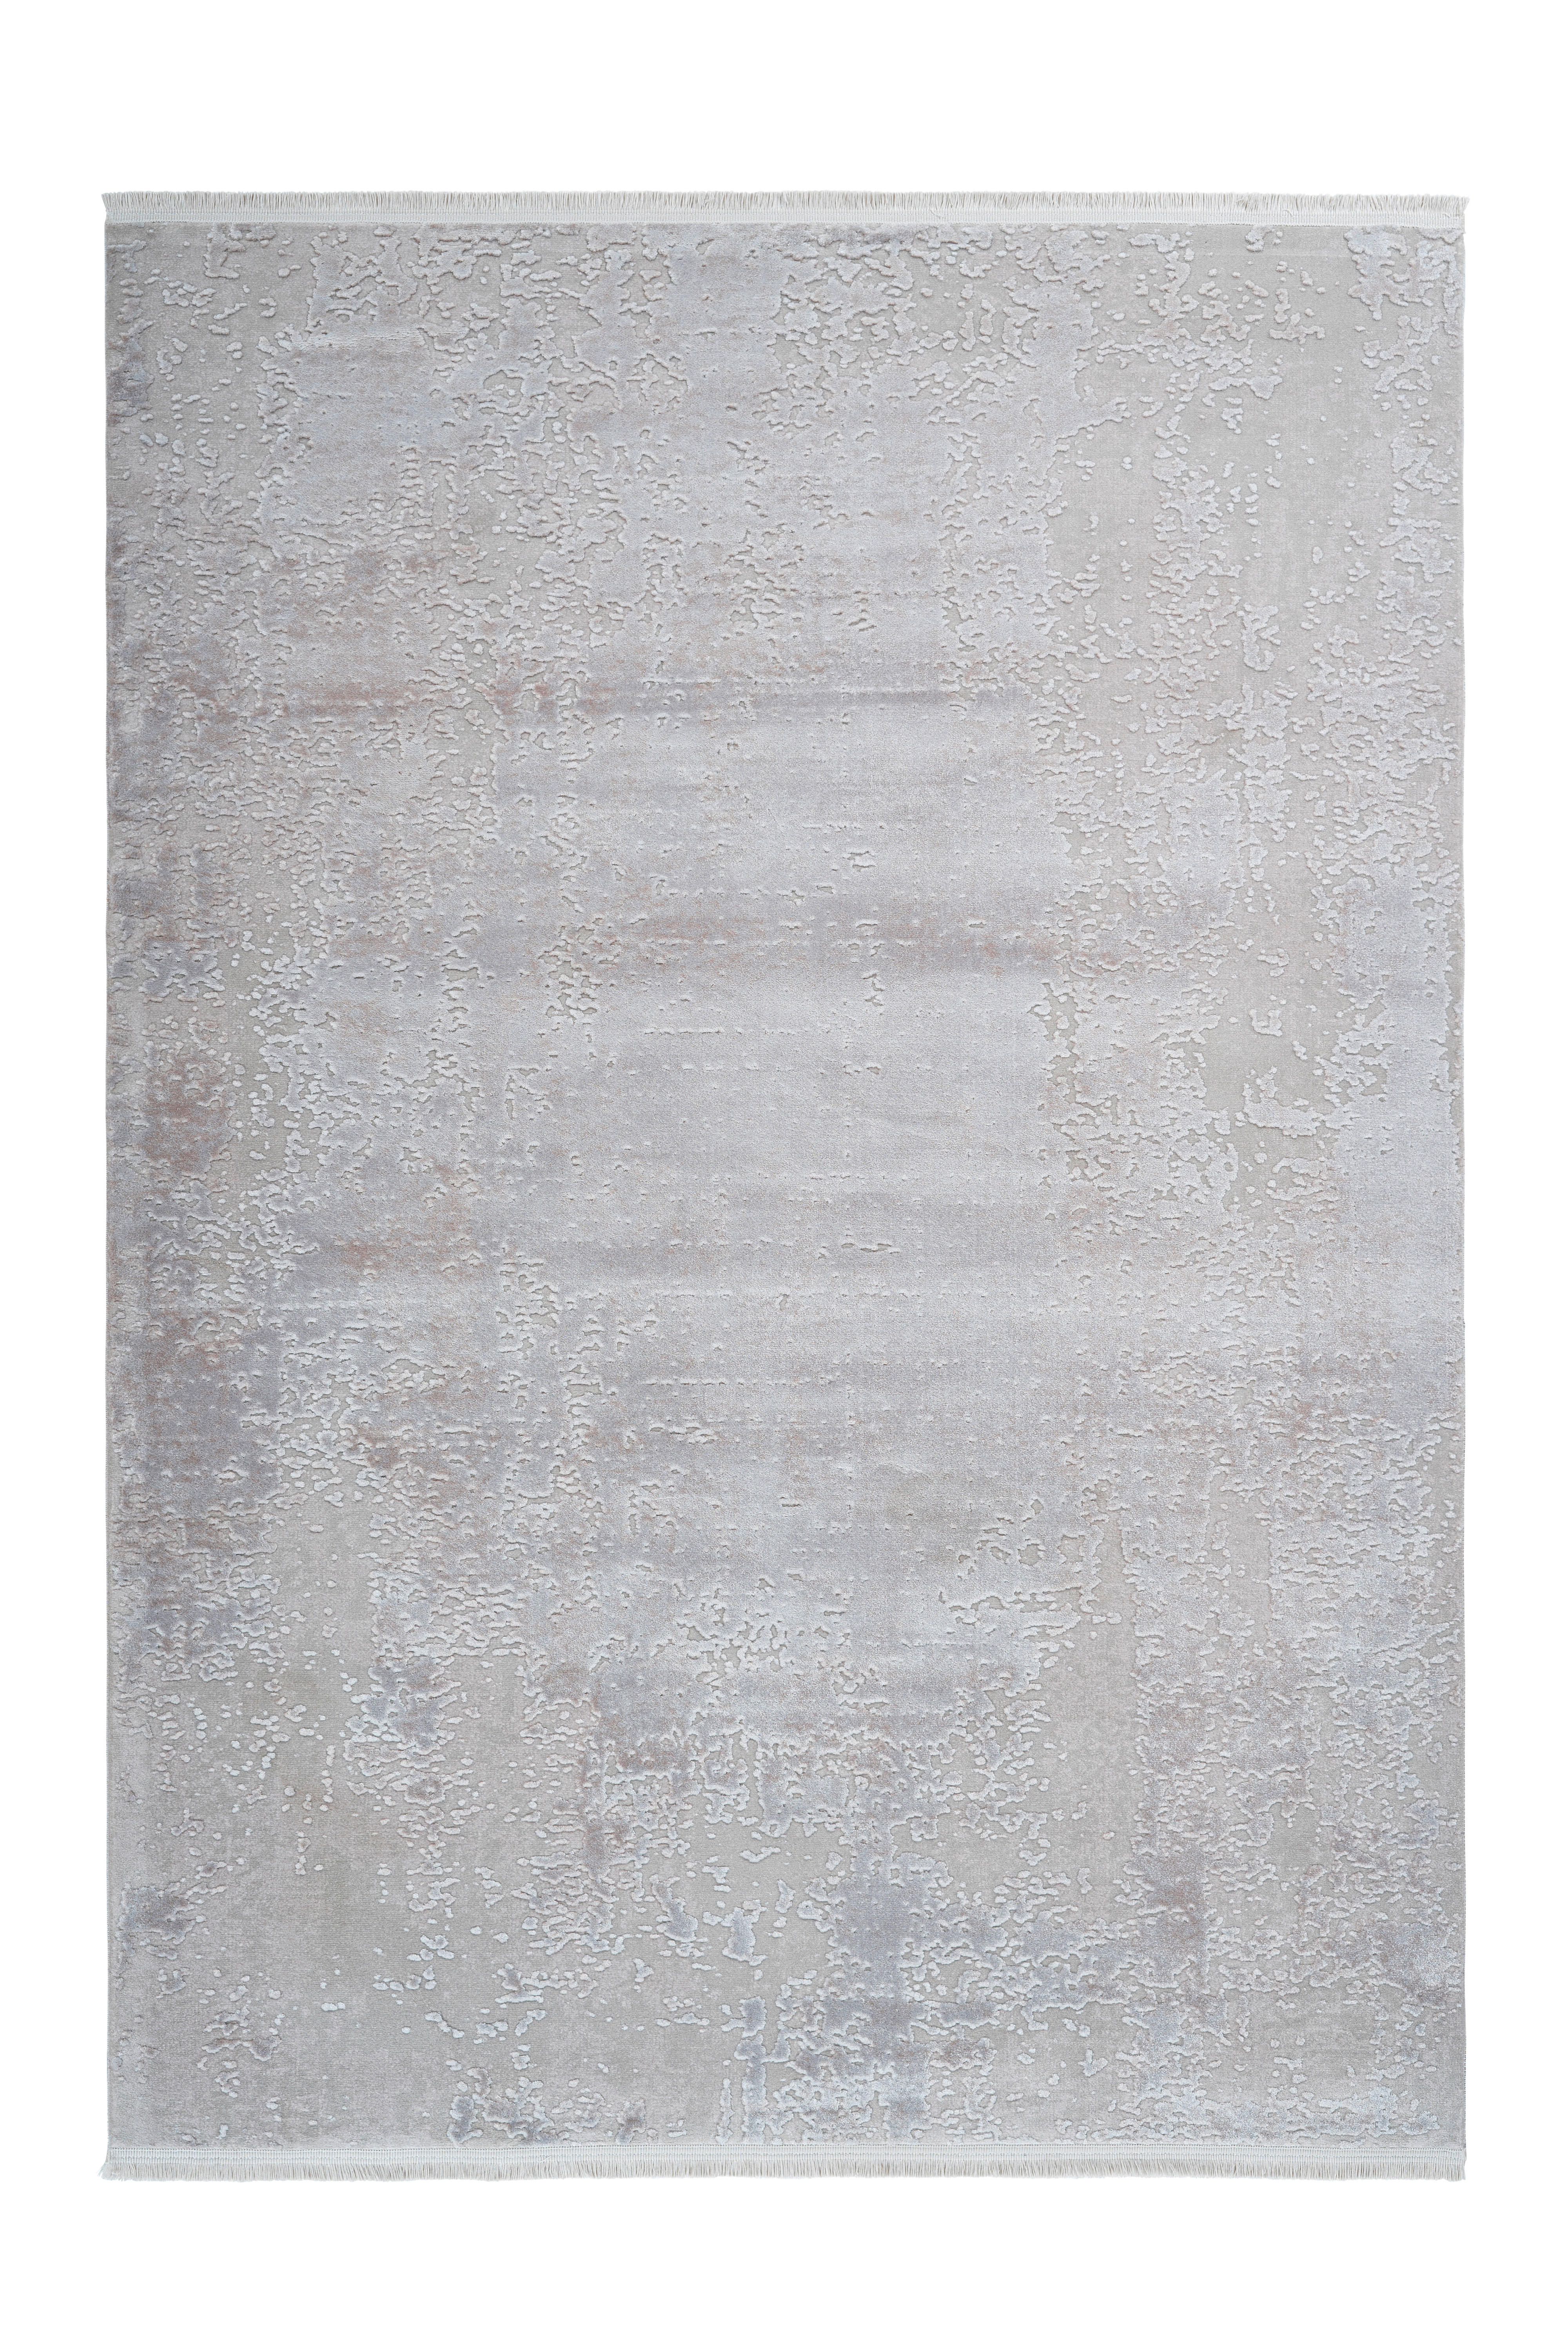 Levně Pierre Cardin TKANÝ KOBEREC, 80/300 cm, barvy stříbra